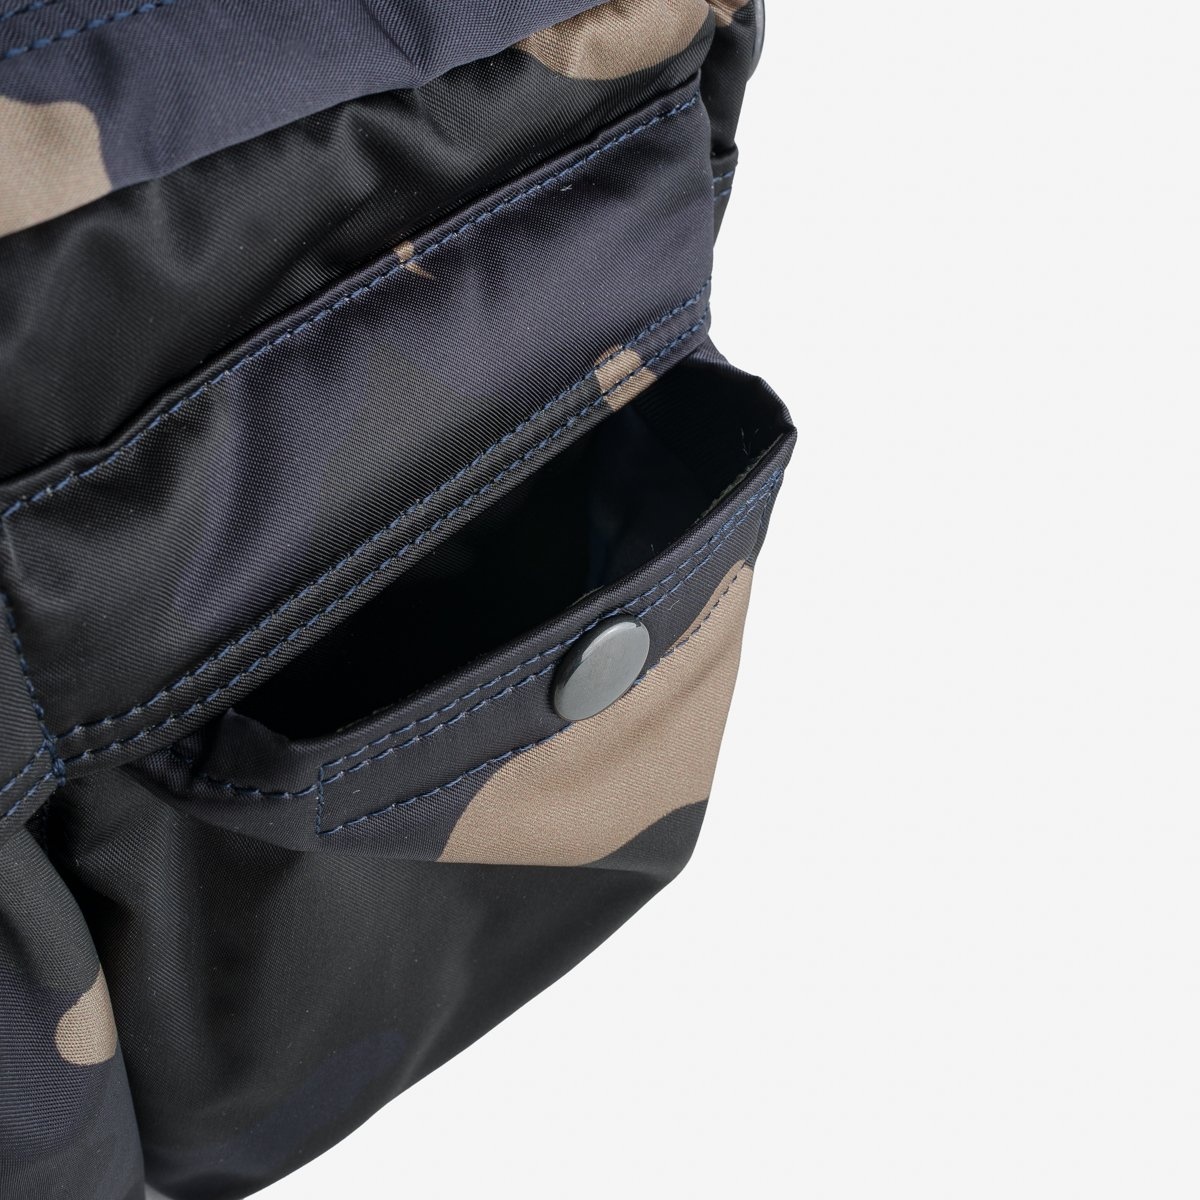 POR-SHLDR-CAM Porter - Yoshida & Co. - Counter Shade Shoulder Bag - Camo - 4